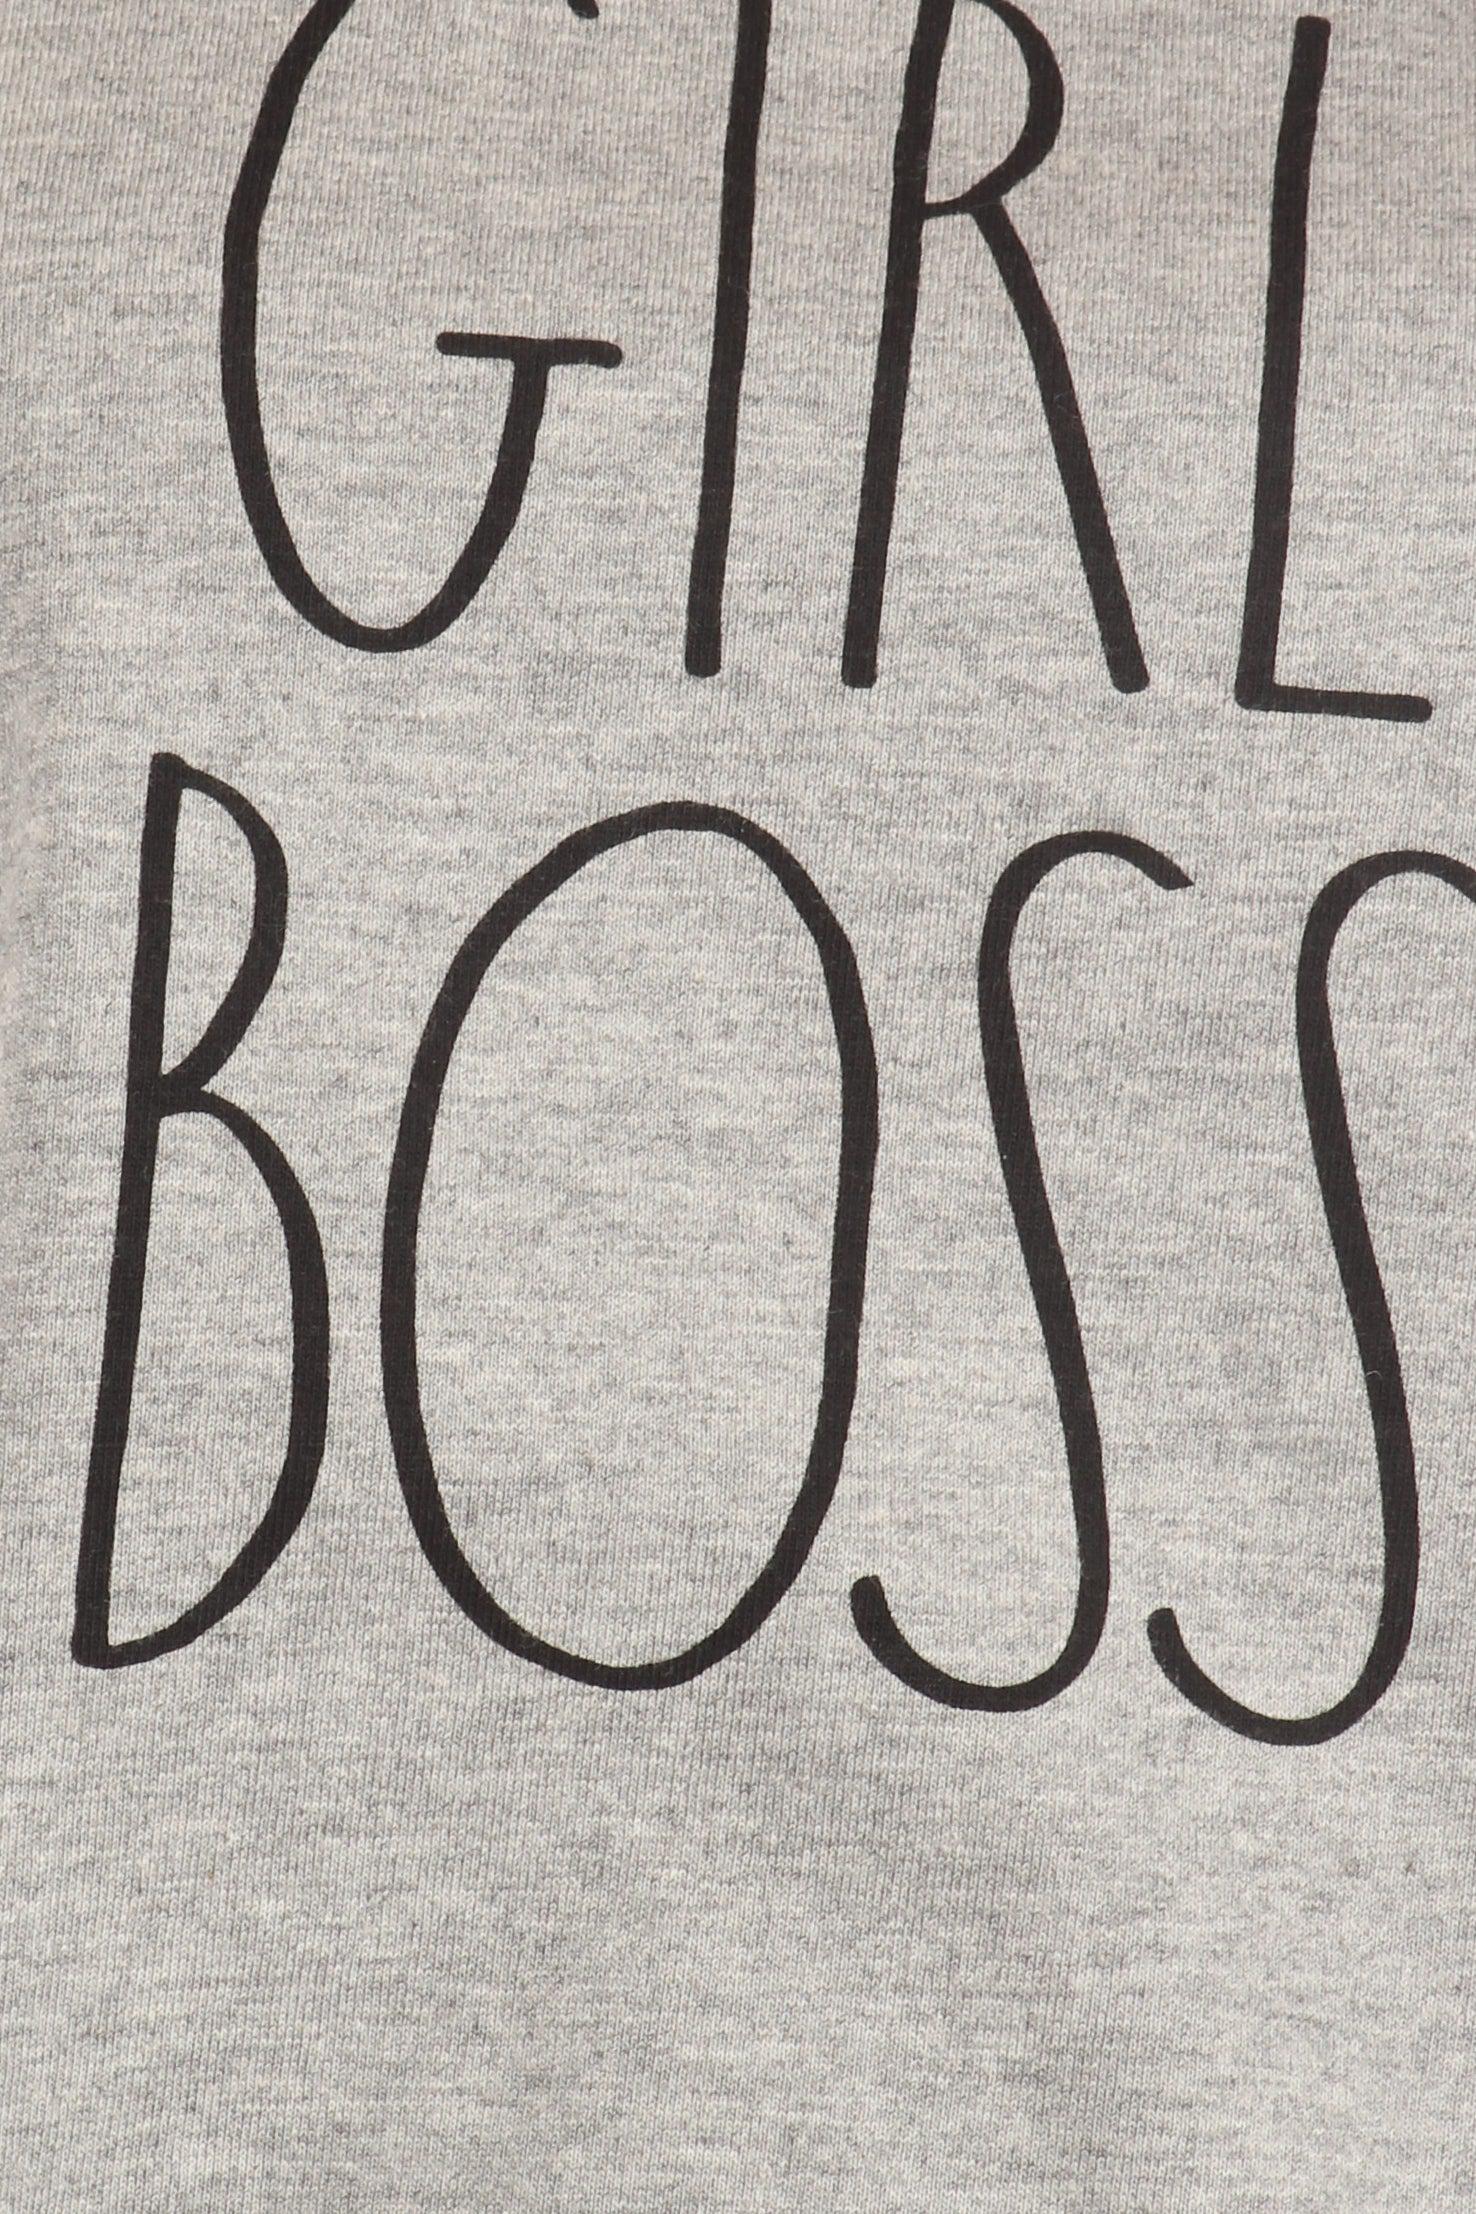 Women's "GIRL BOSS" Short Sleeve Icon T-Shirt - Shop Rae Dunn Apparel and Sleepwear